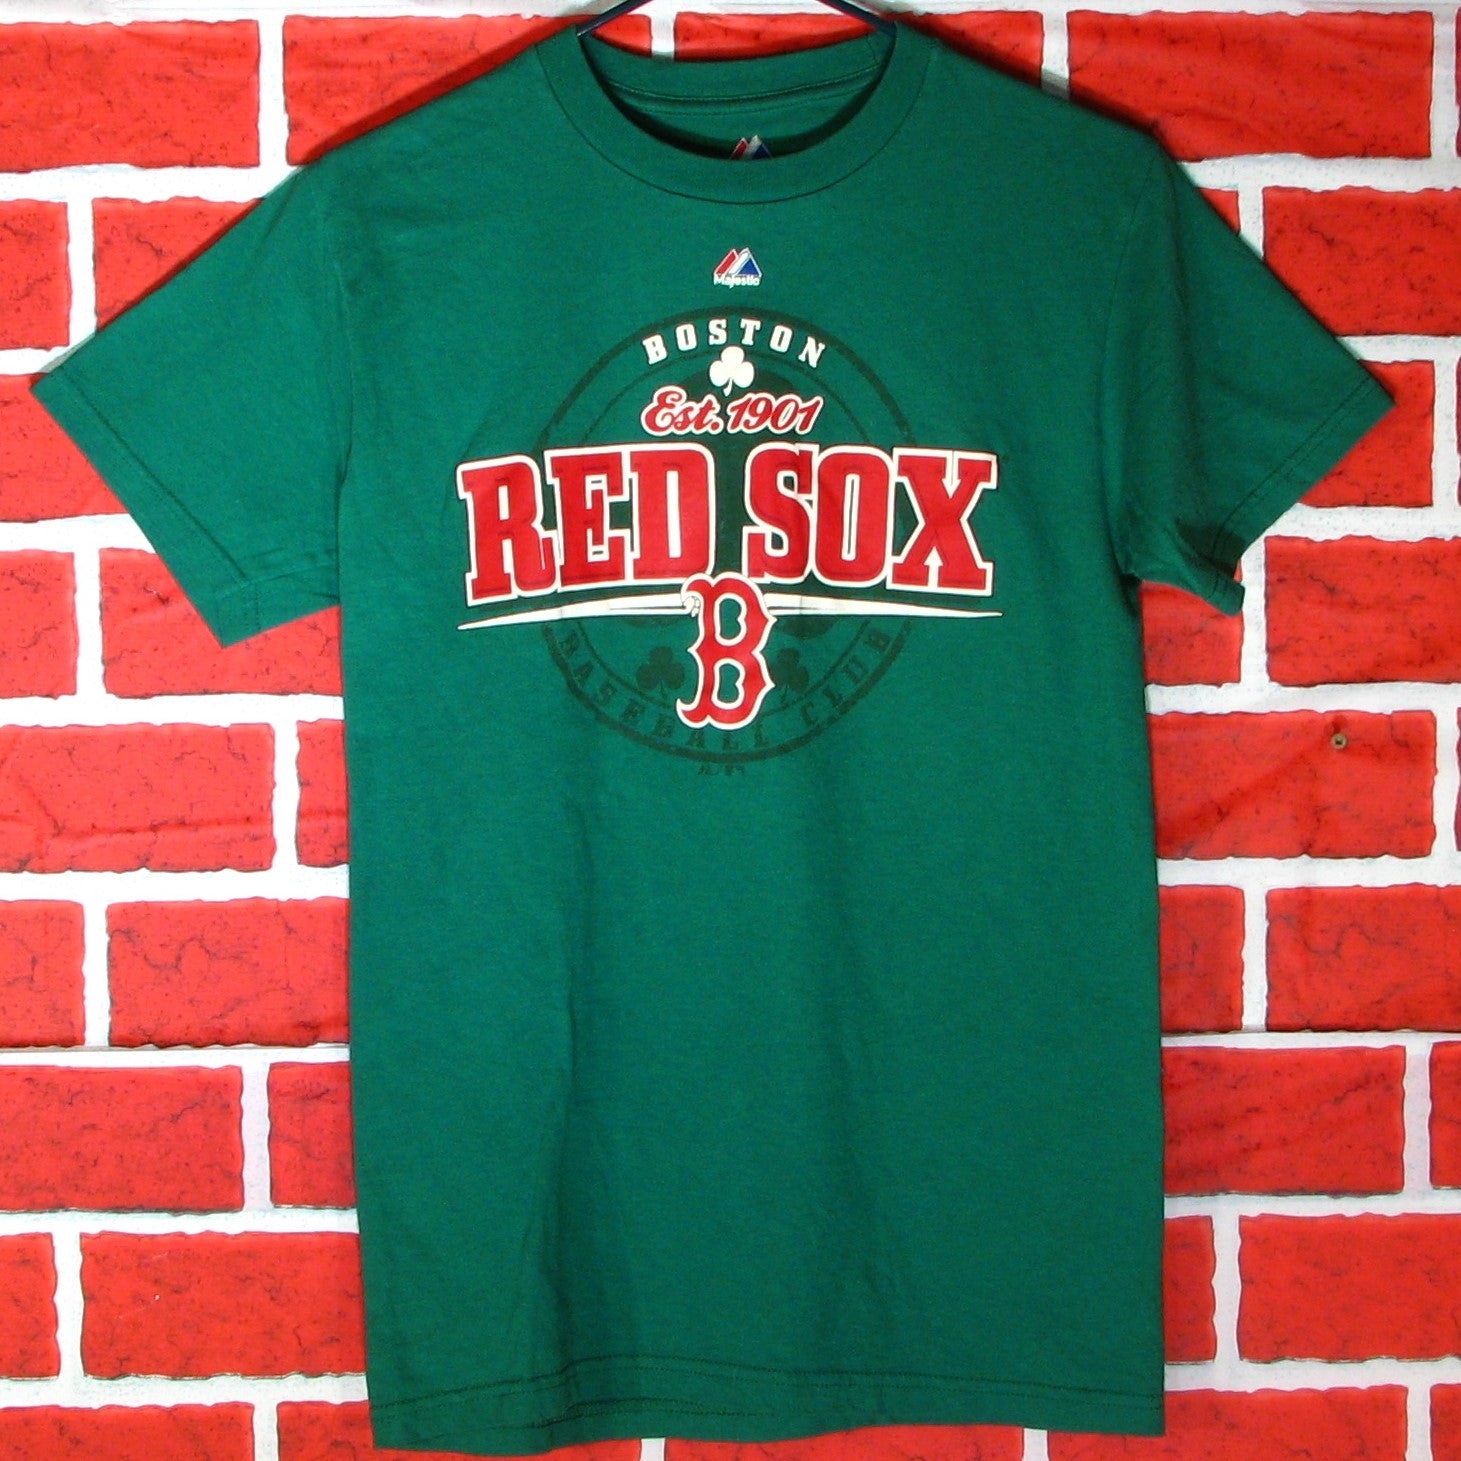 boston red sox vintage t shirt